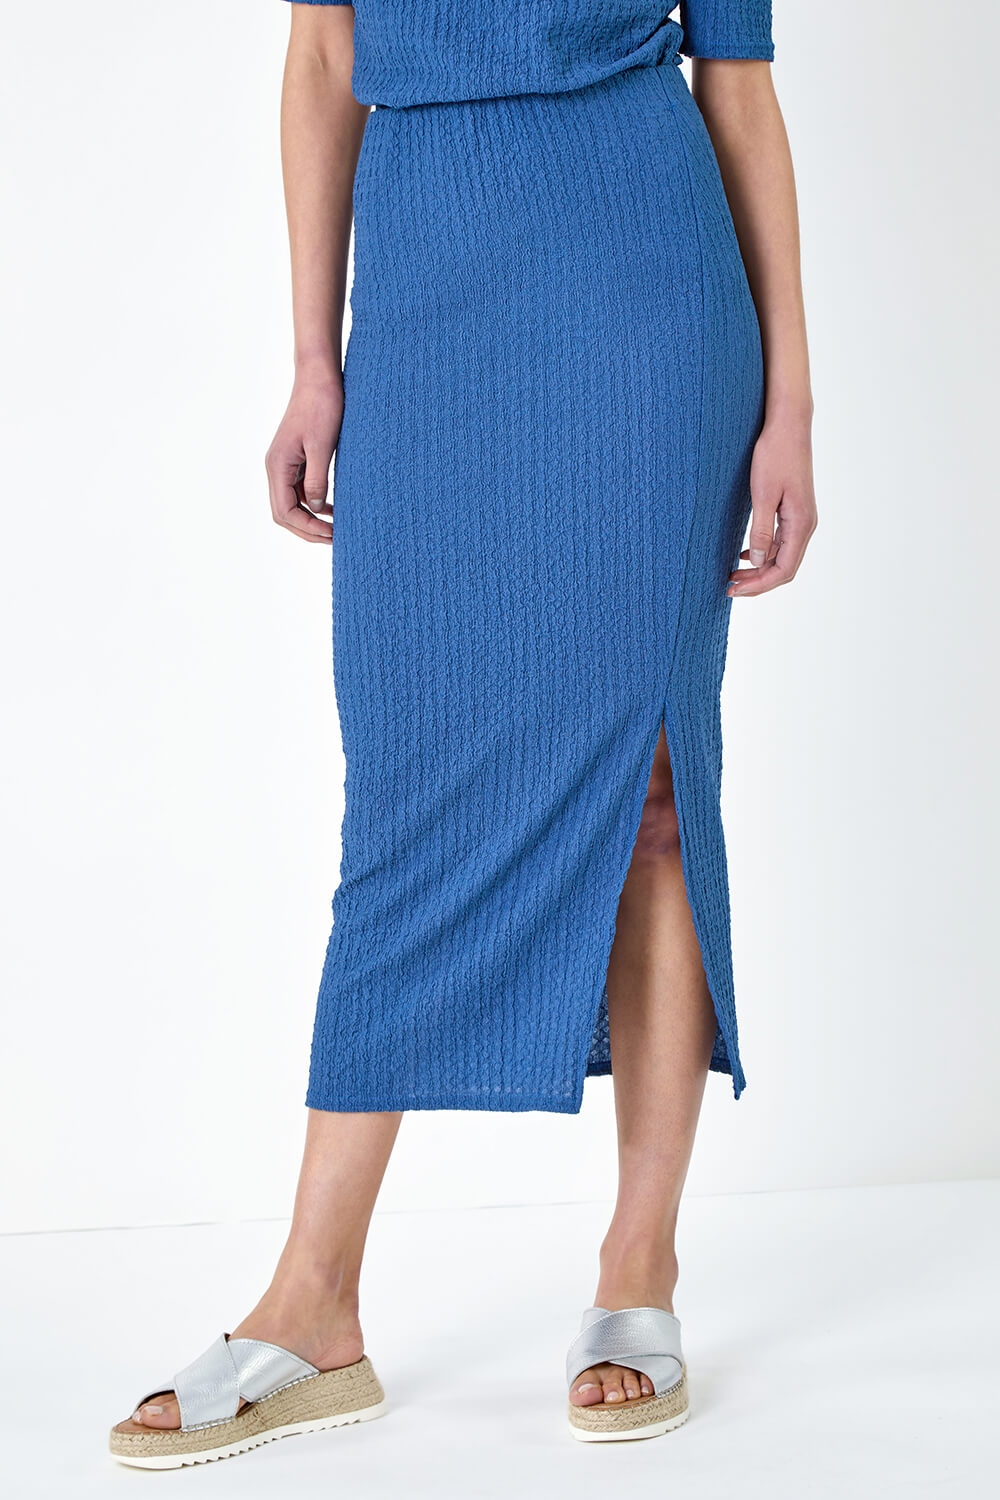 Denim Textured Stretch Midi Skirt, Image 4 of 5